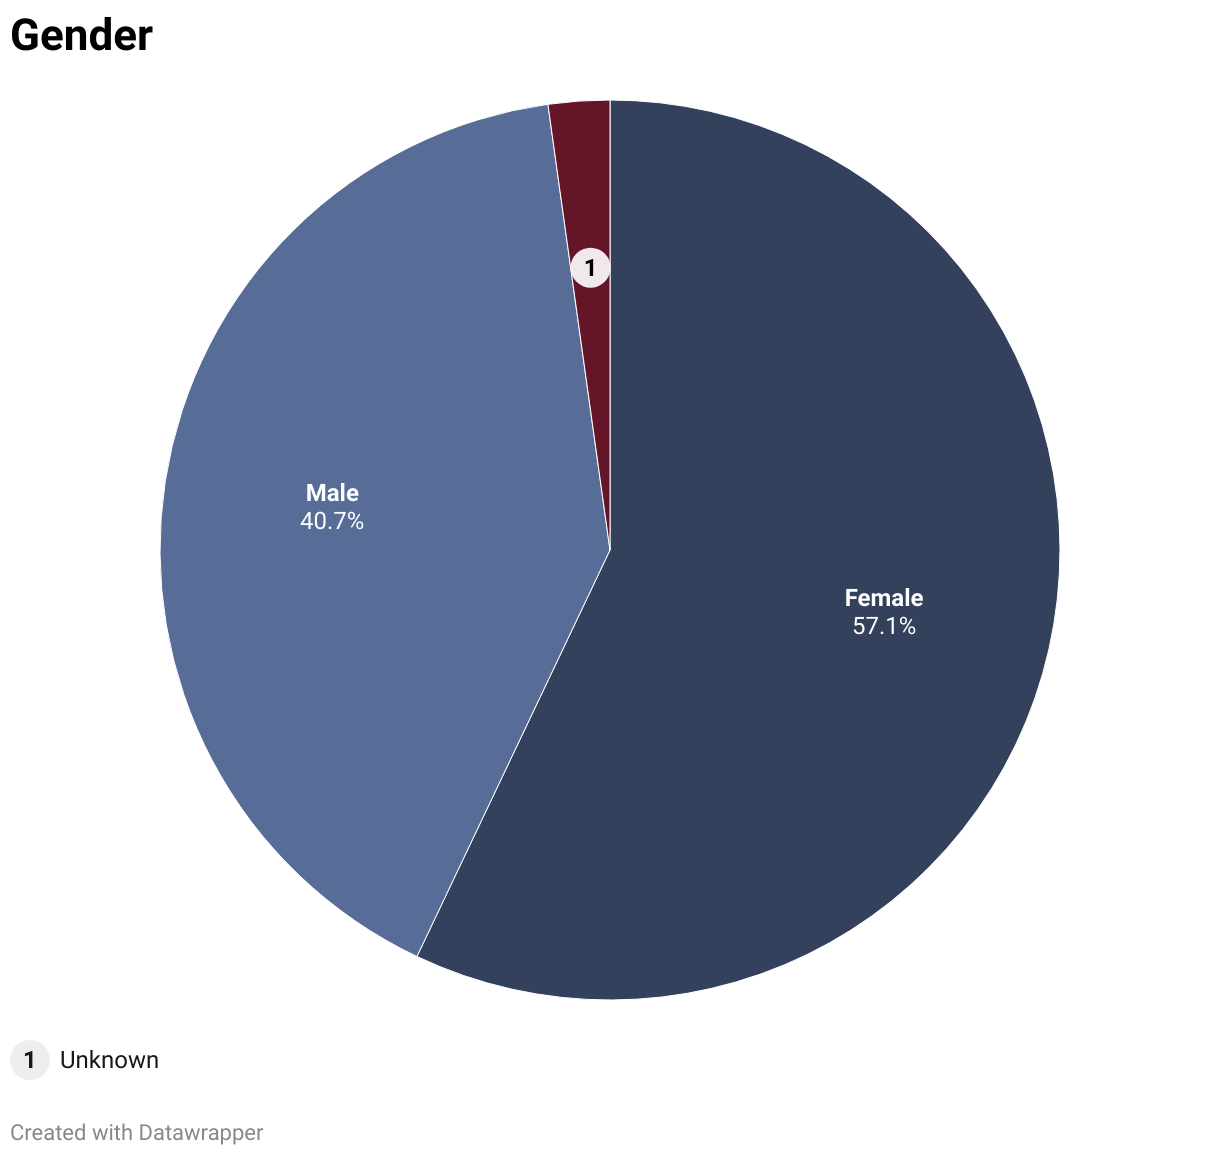 40.7% male, 57.1% female, 2.2% unknown